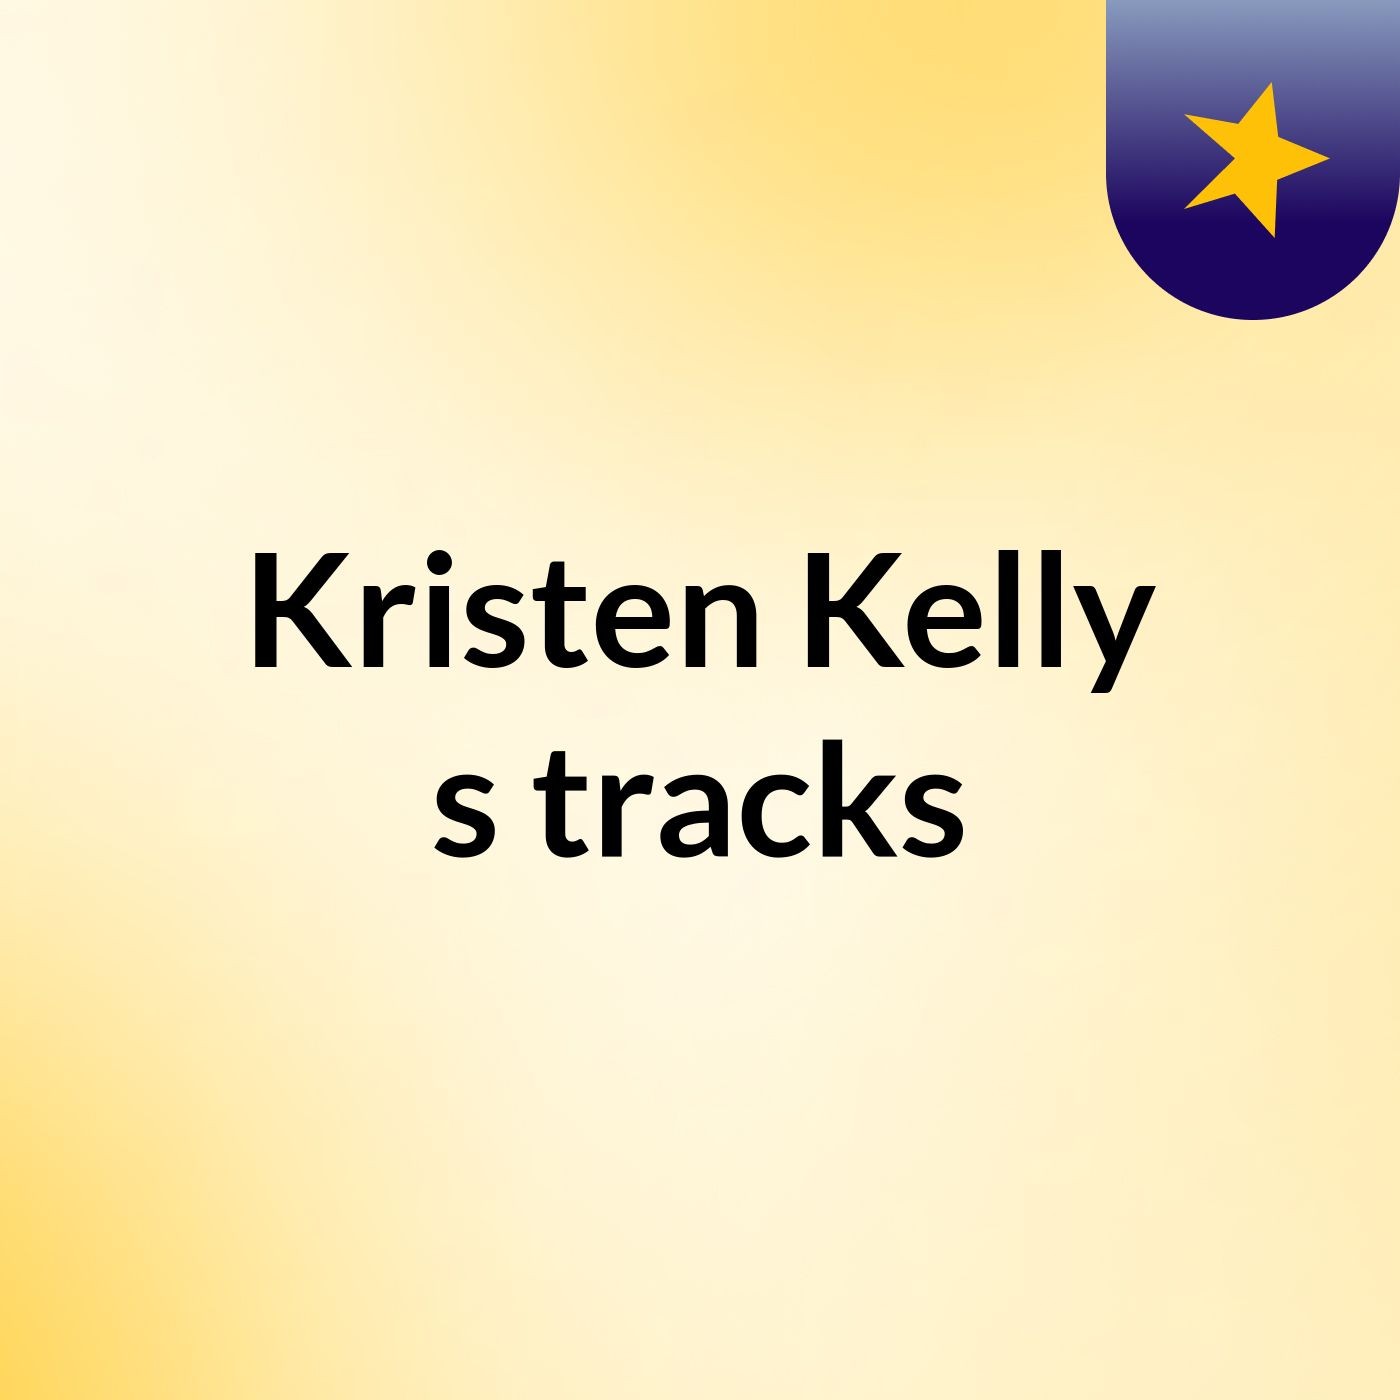 Kristen Kelly's tracks